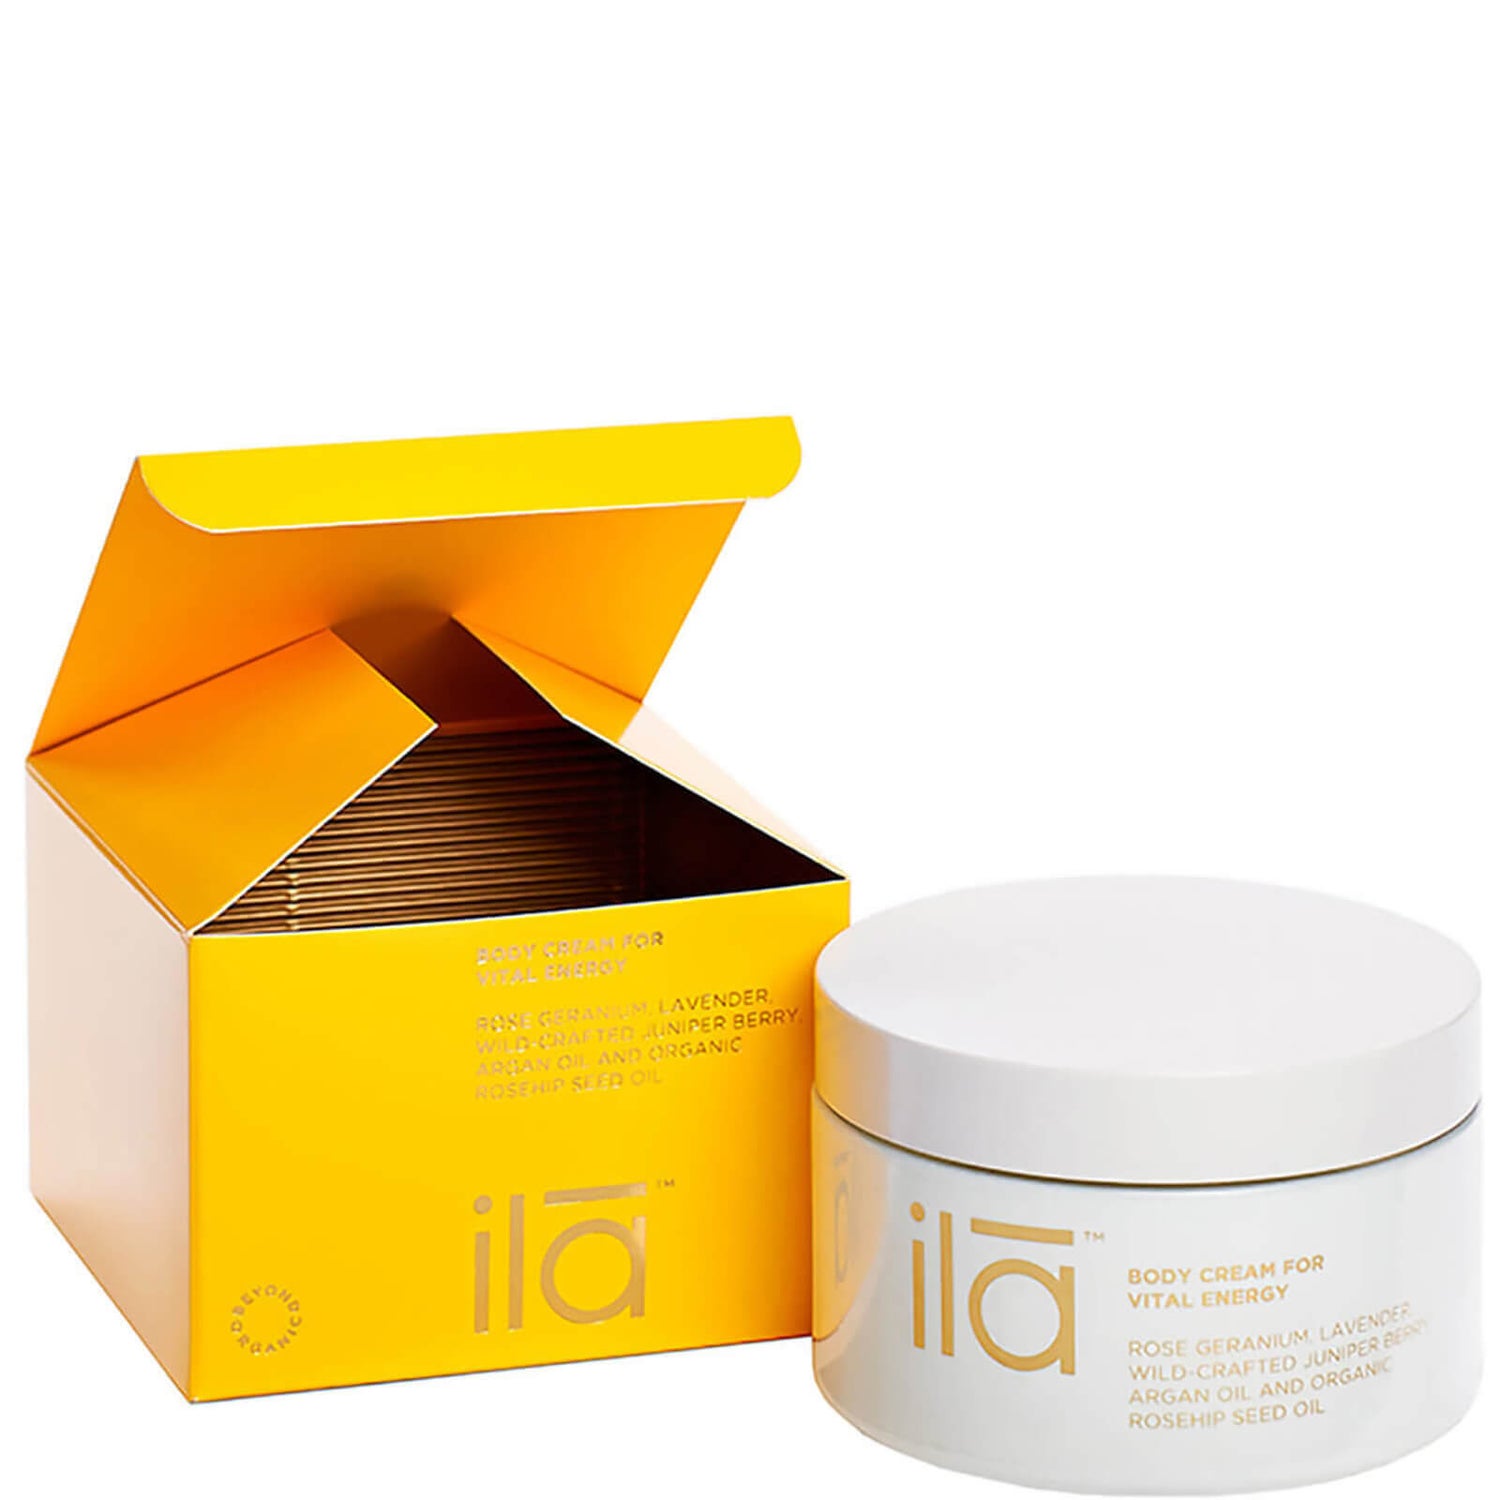 ila-spa Body Cream for Vital Energy(일라-스파 바디 크림 포 바이탈 에너지 200g)